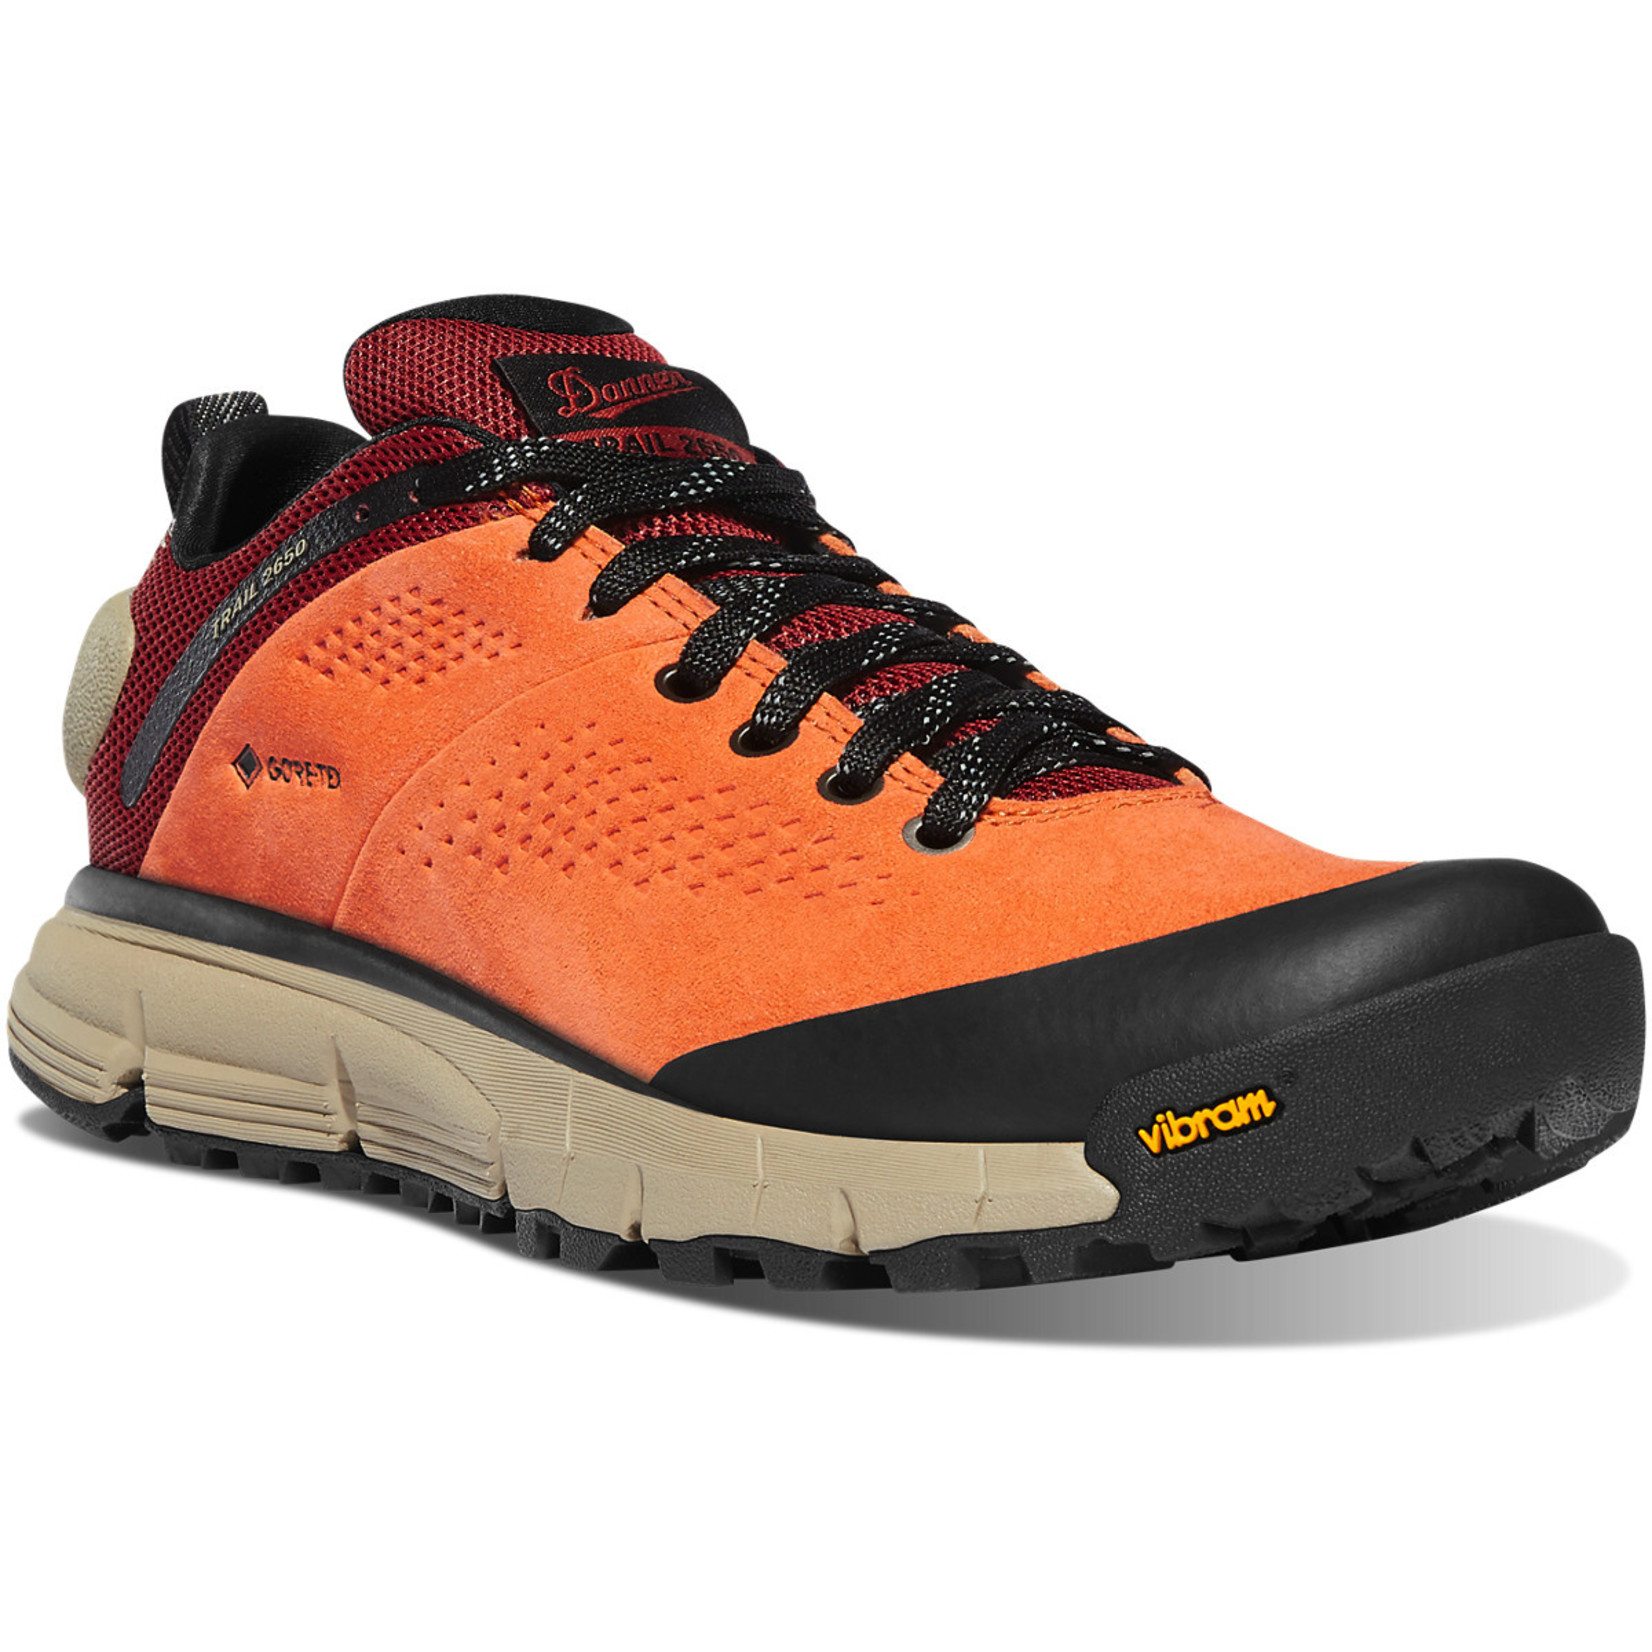 Danner Danner 61289 Trail 2650 GTX Women’s Hiking Shoes